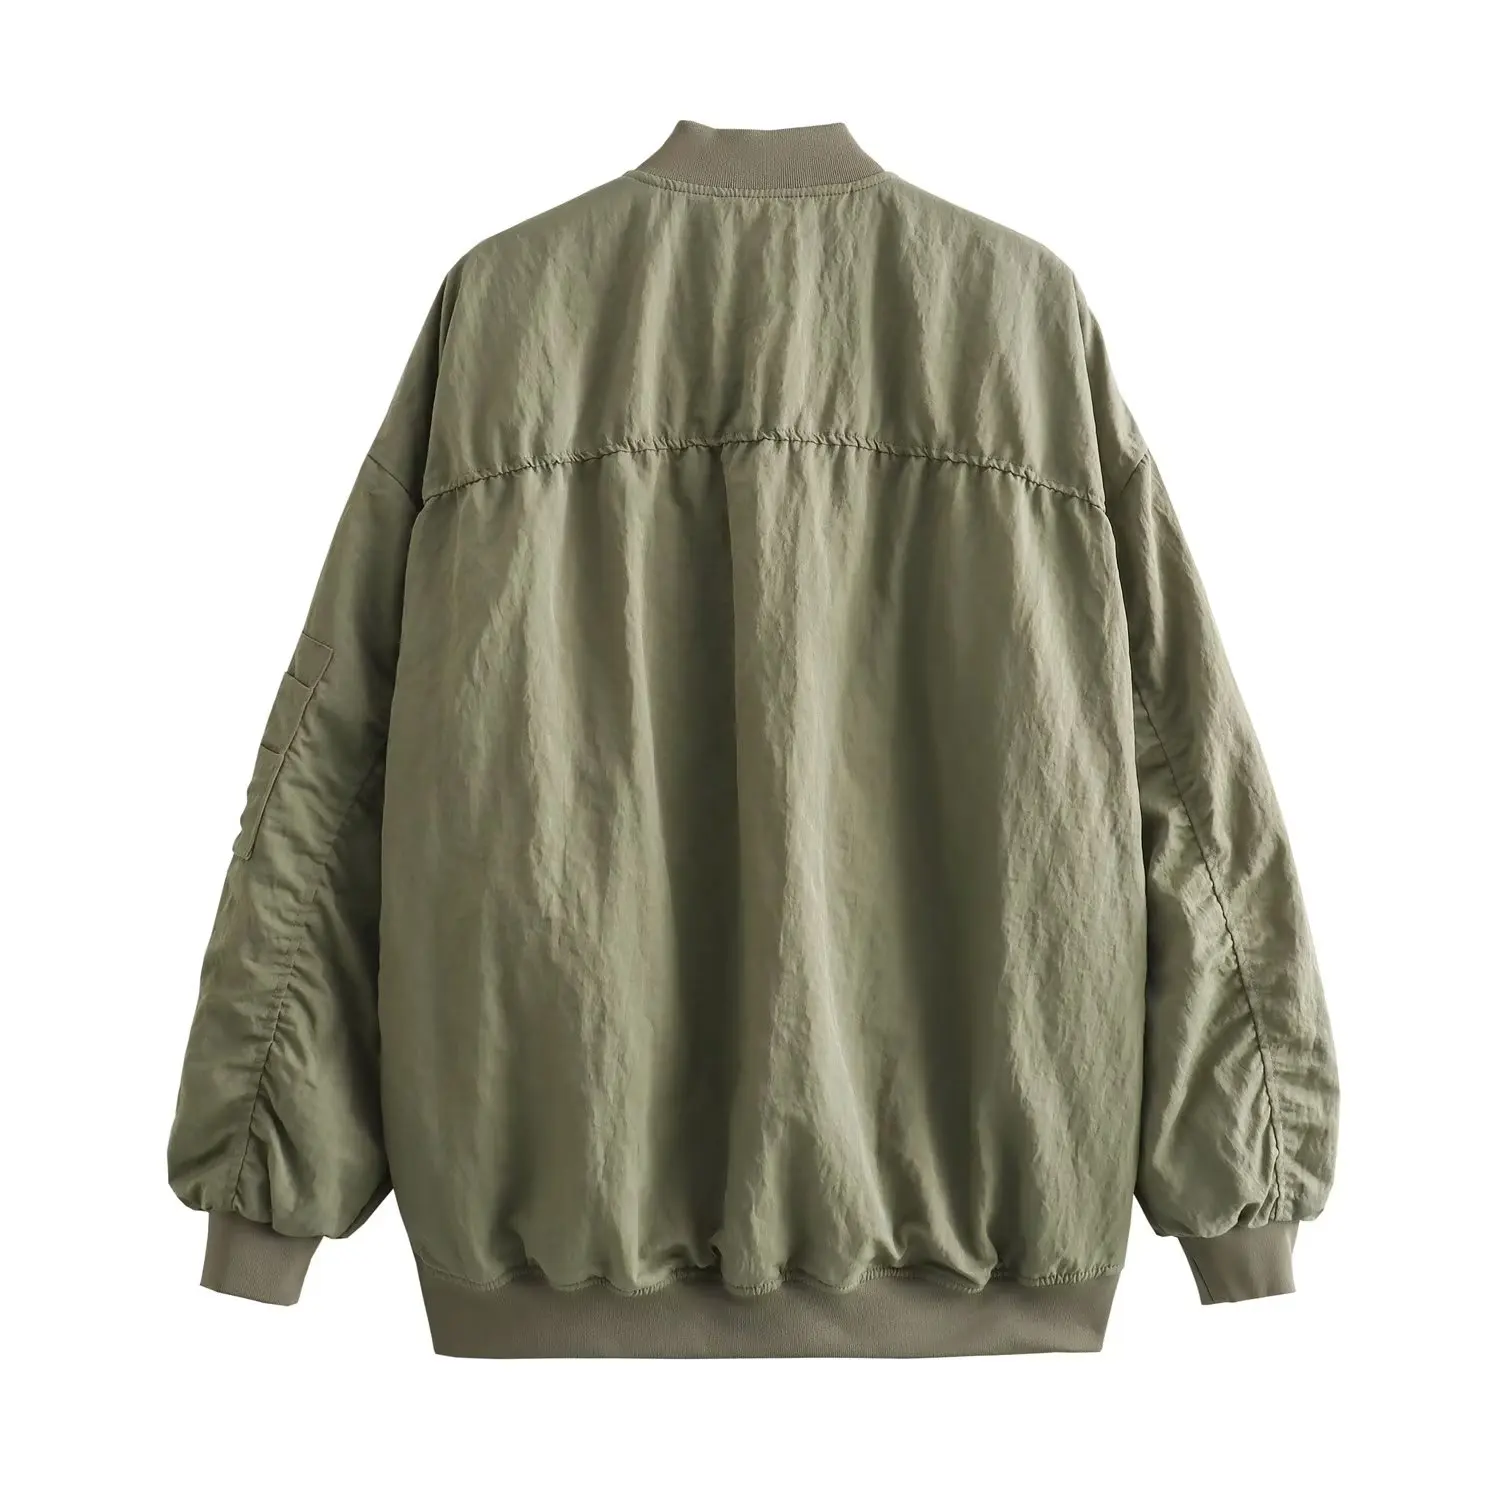 Maxdutti Autumn American Retro Fashion Boyfirned Military Bomber Jacket Green Loose Coat For Women